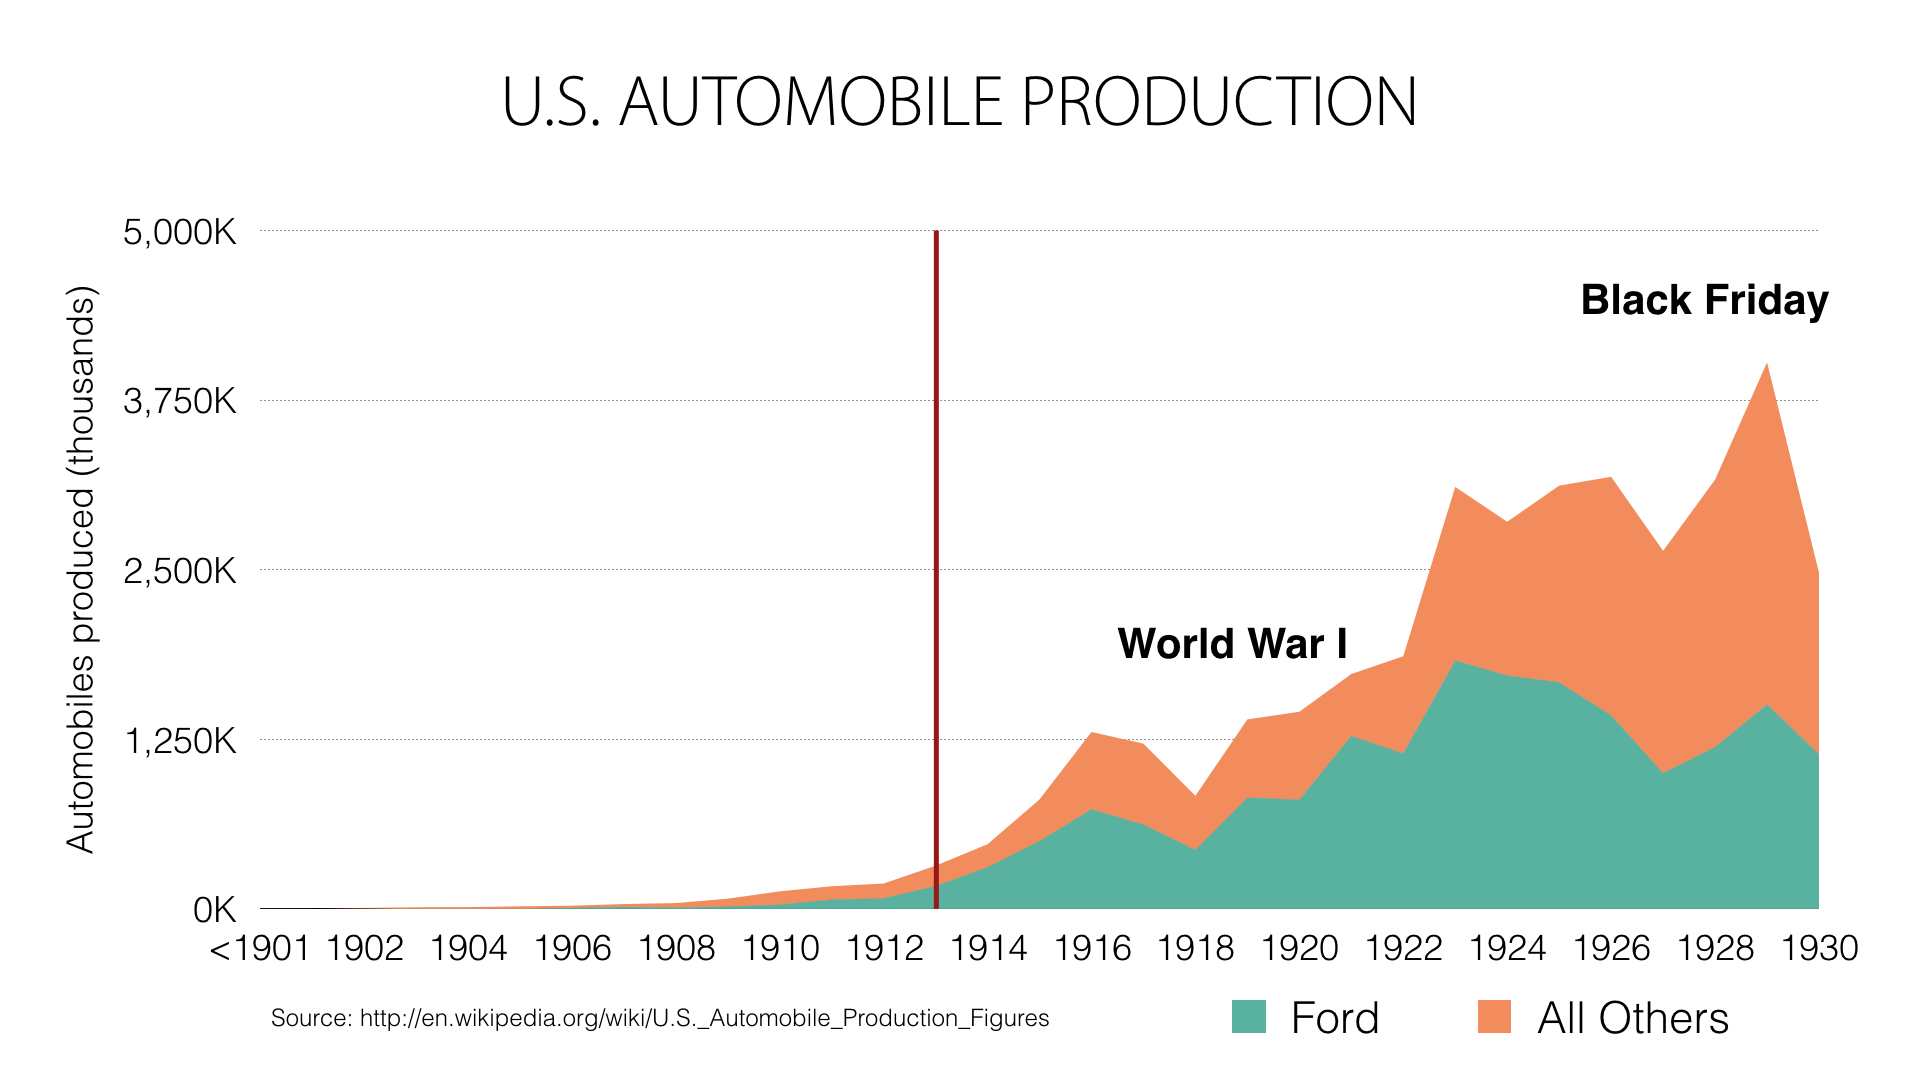 U.S. Automobile production figures - 1901-1930